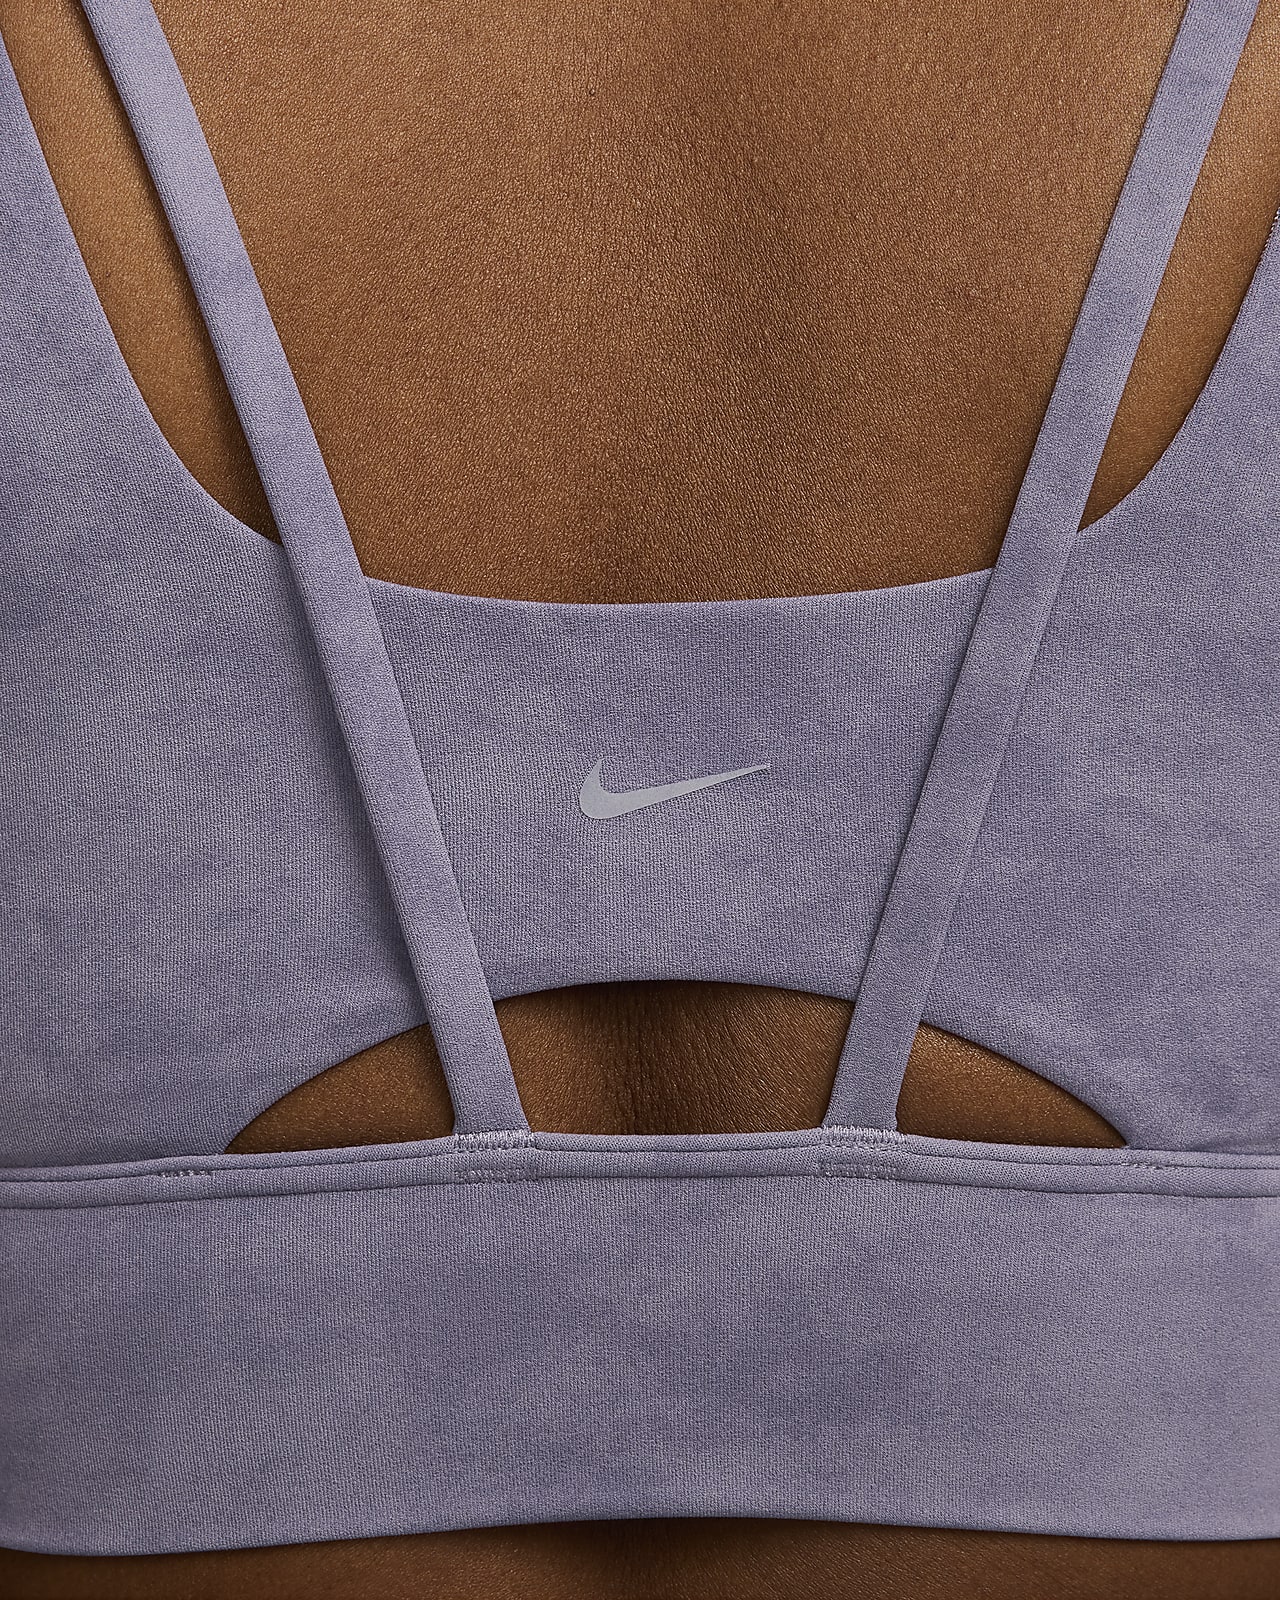 Longline Clothing. Nike CA